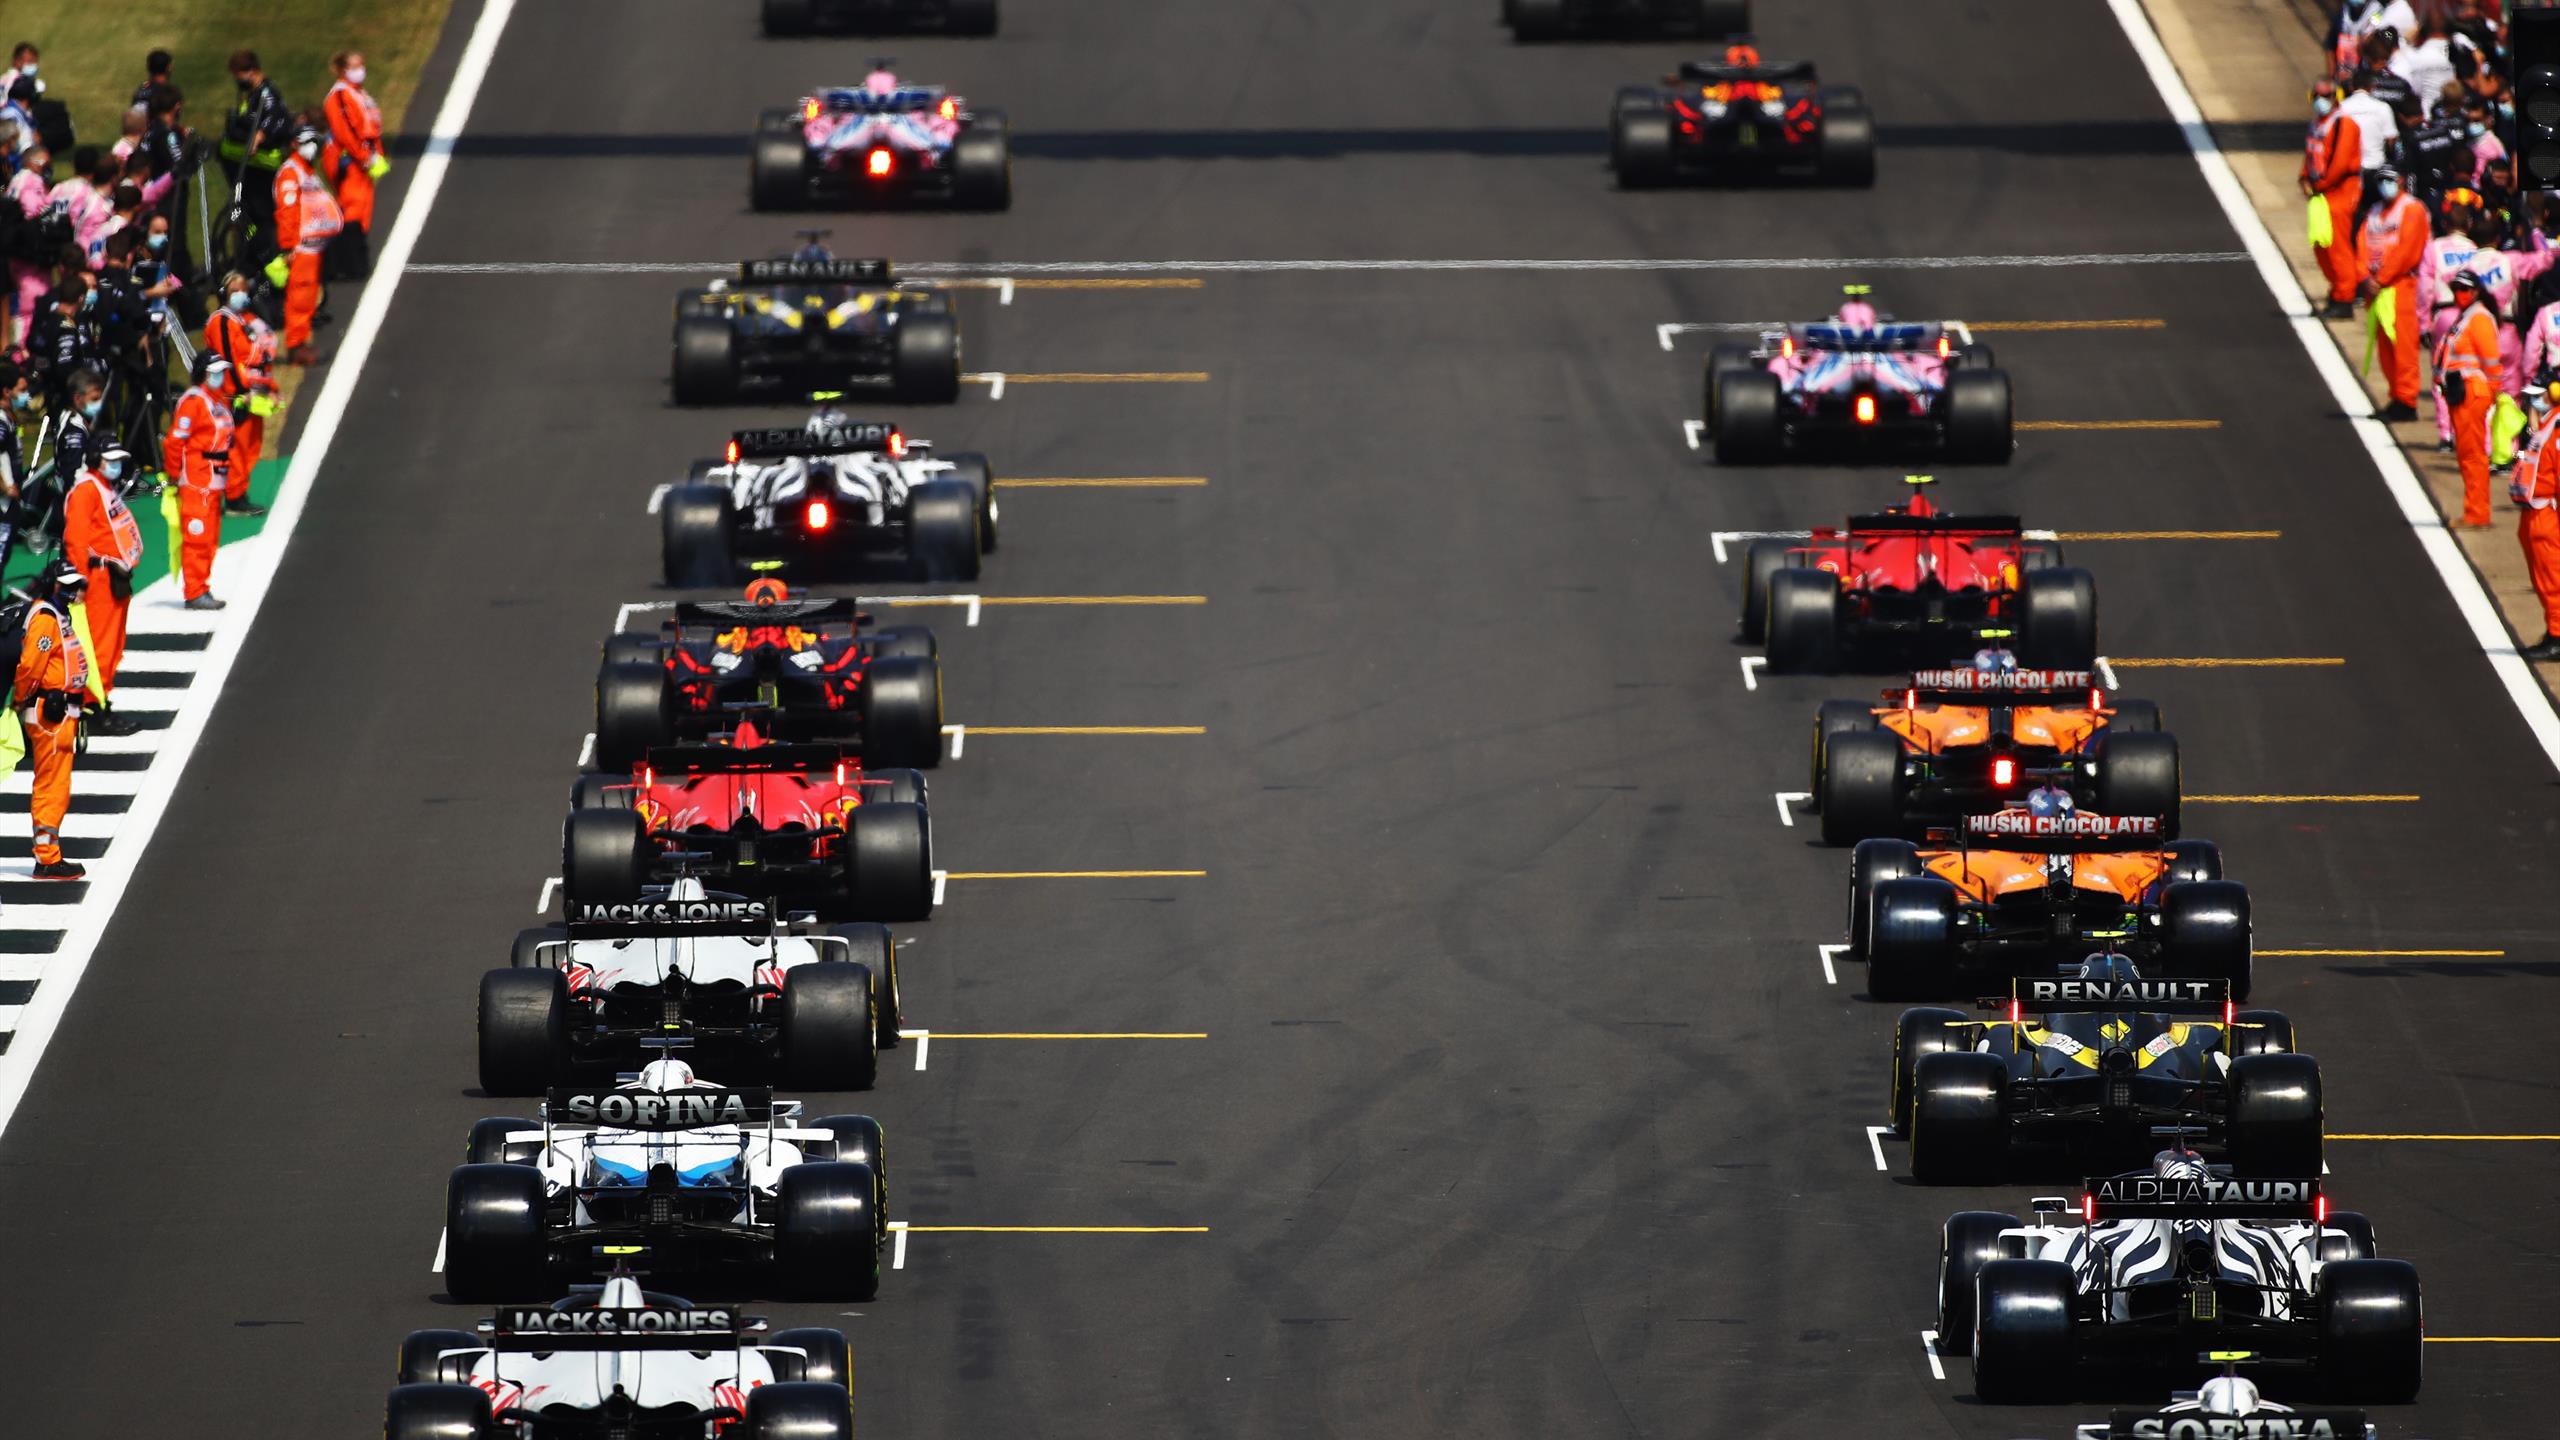 Silverstone: Formula 1 qualifying tests for the British Grand Prix - movement or boredom?